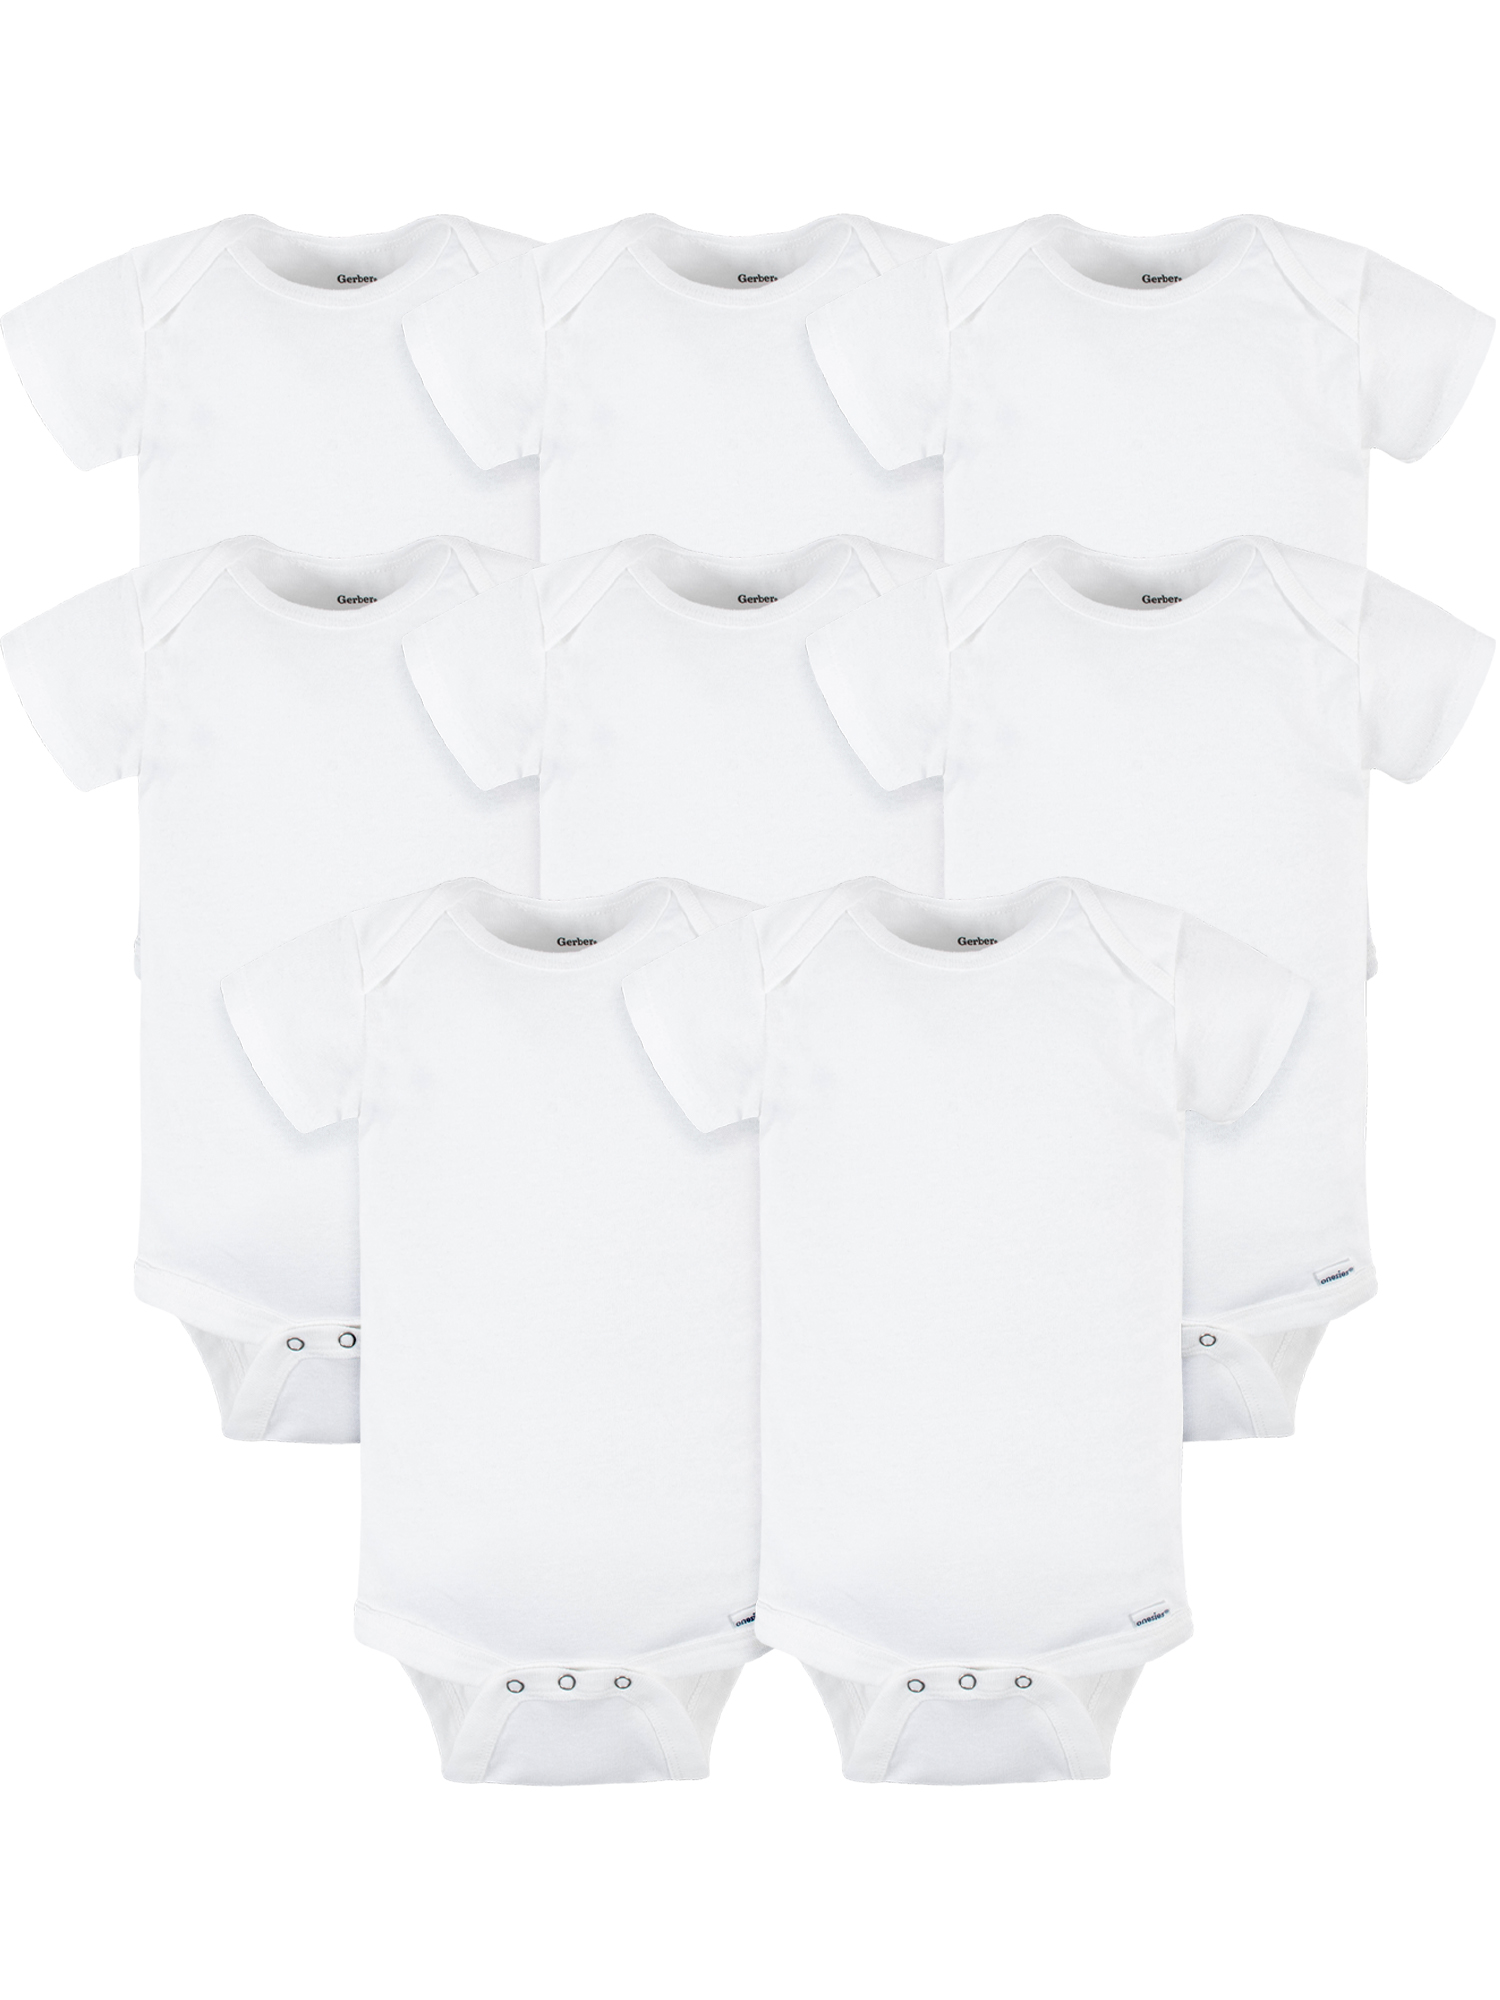 Gerber Baby Unisex White Short Sleeve Cotton Onesies Bodysuits, 8-Pack, Preemie-24 Months - image 1 of 13